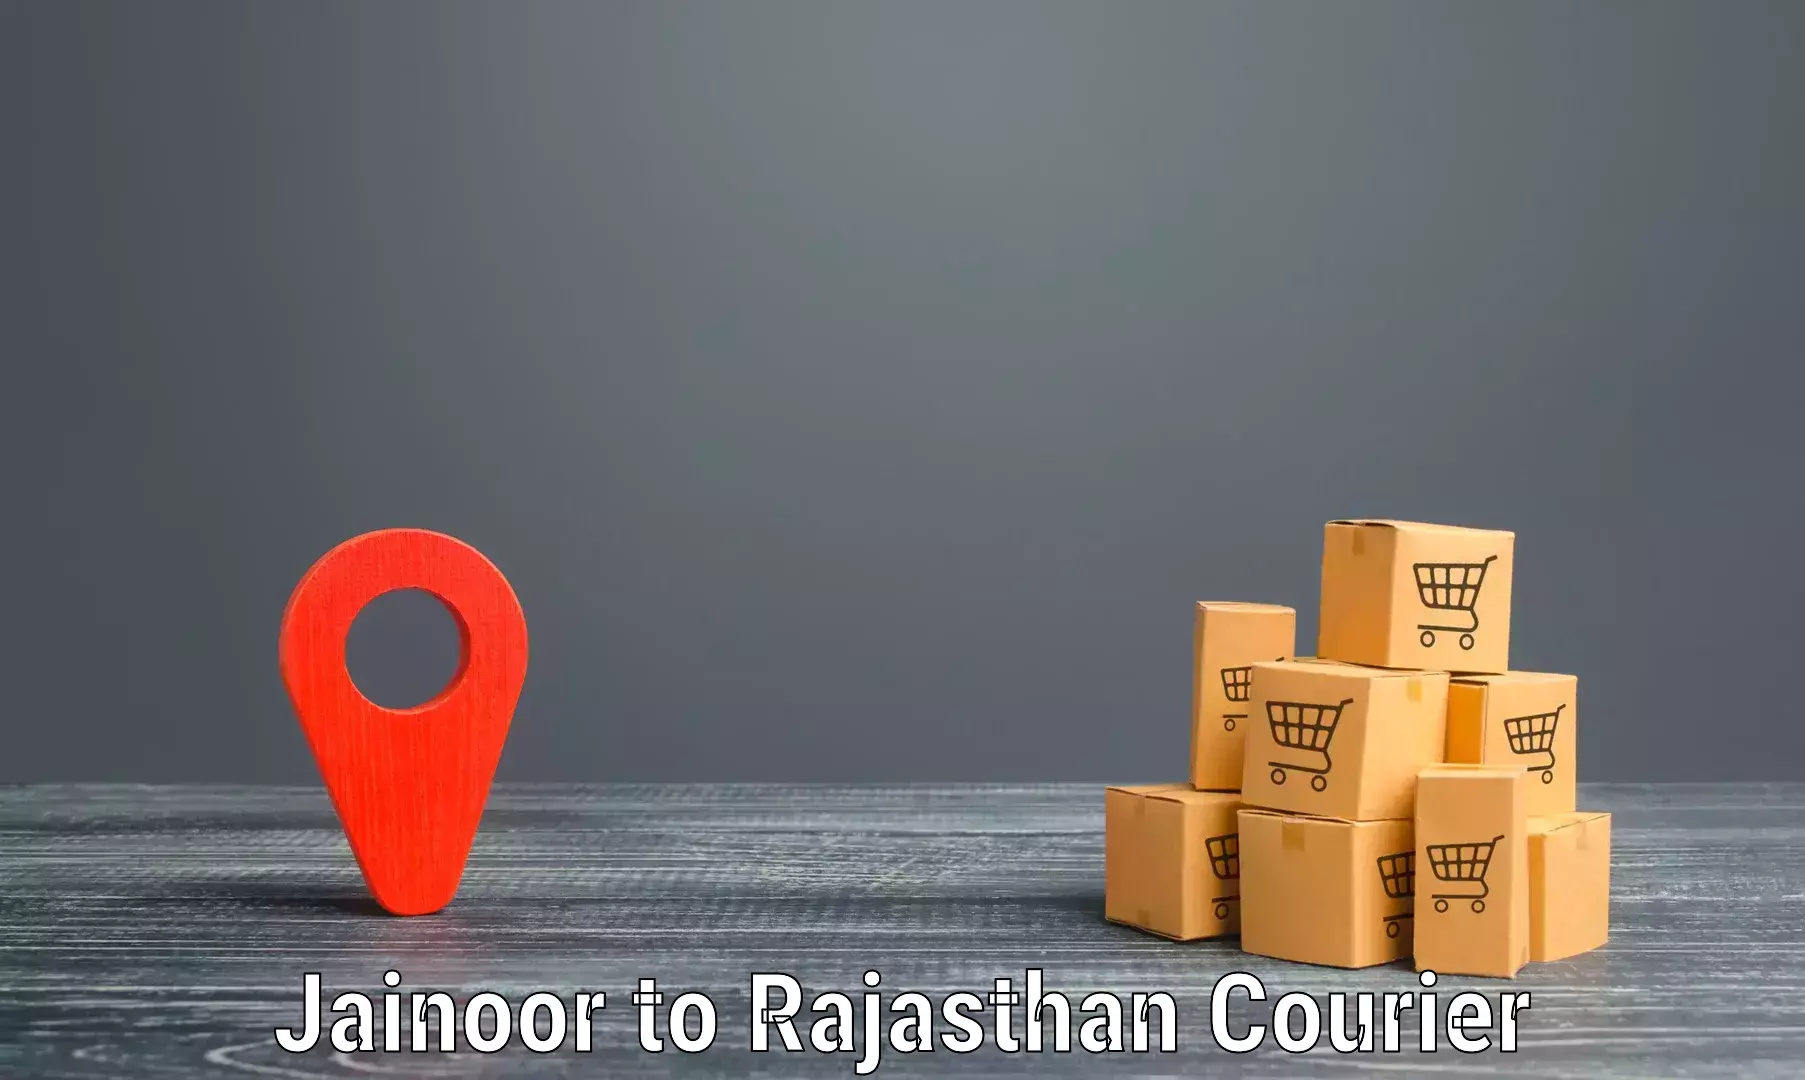 Global logistics network Jainoor to Shrimadhopur